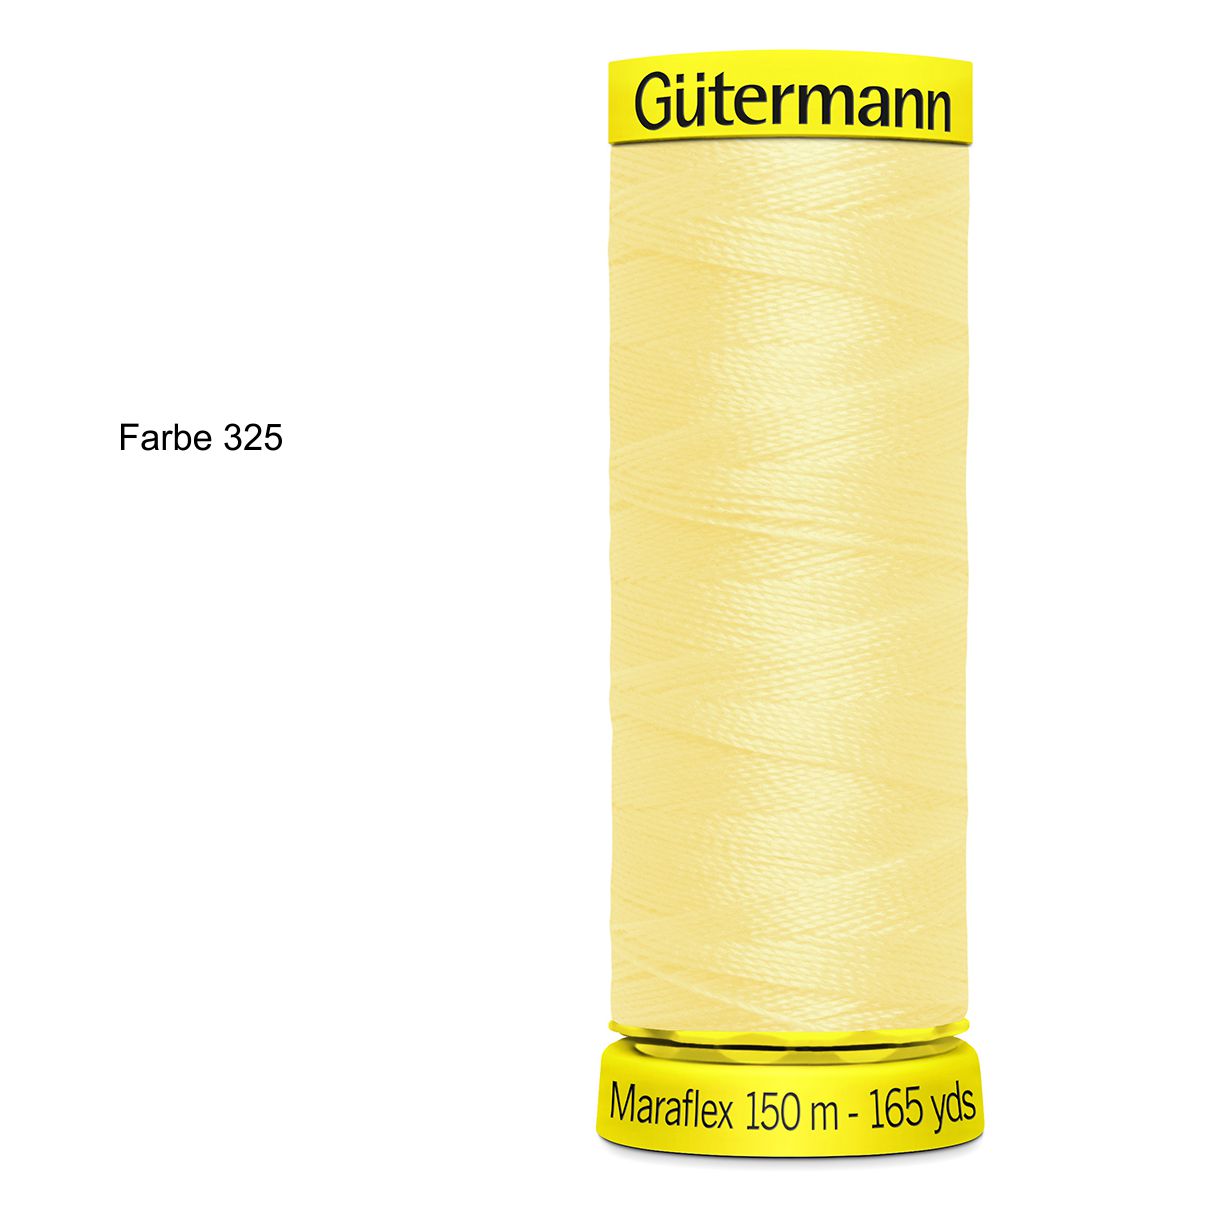 Gütermann Maraflex Elastic- Nähgarn 150m Farbe 325